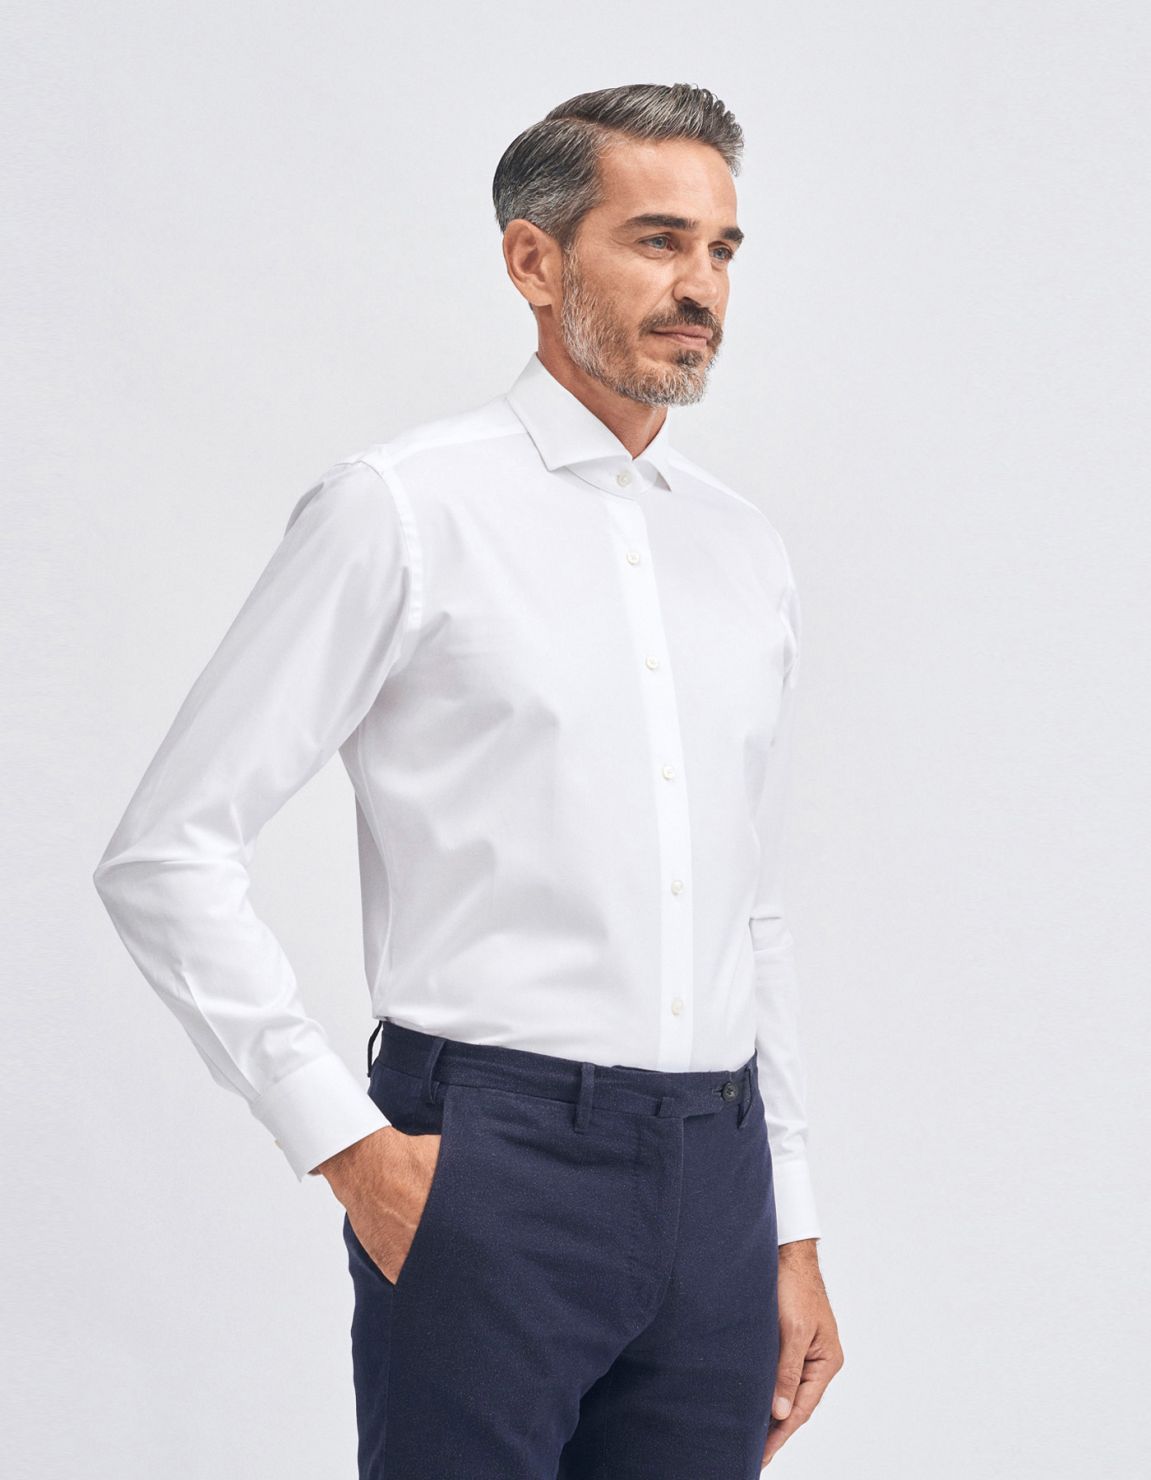 Shirt Collar cutaway White Twill Tailor Custom Fit 1